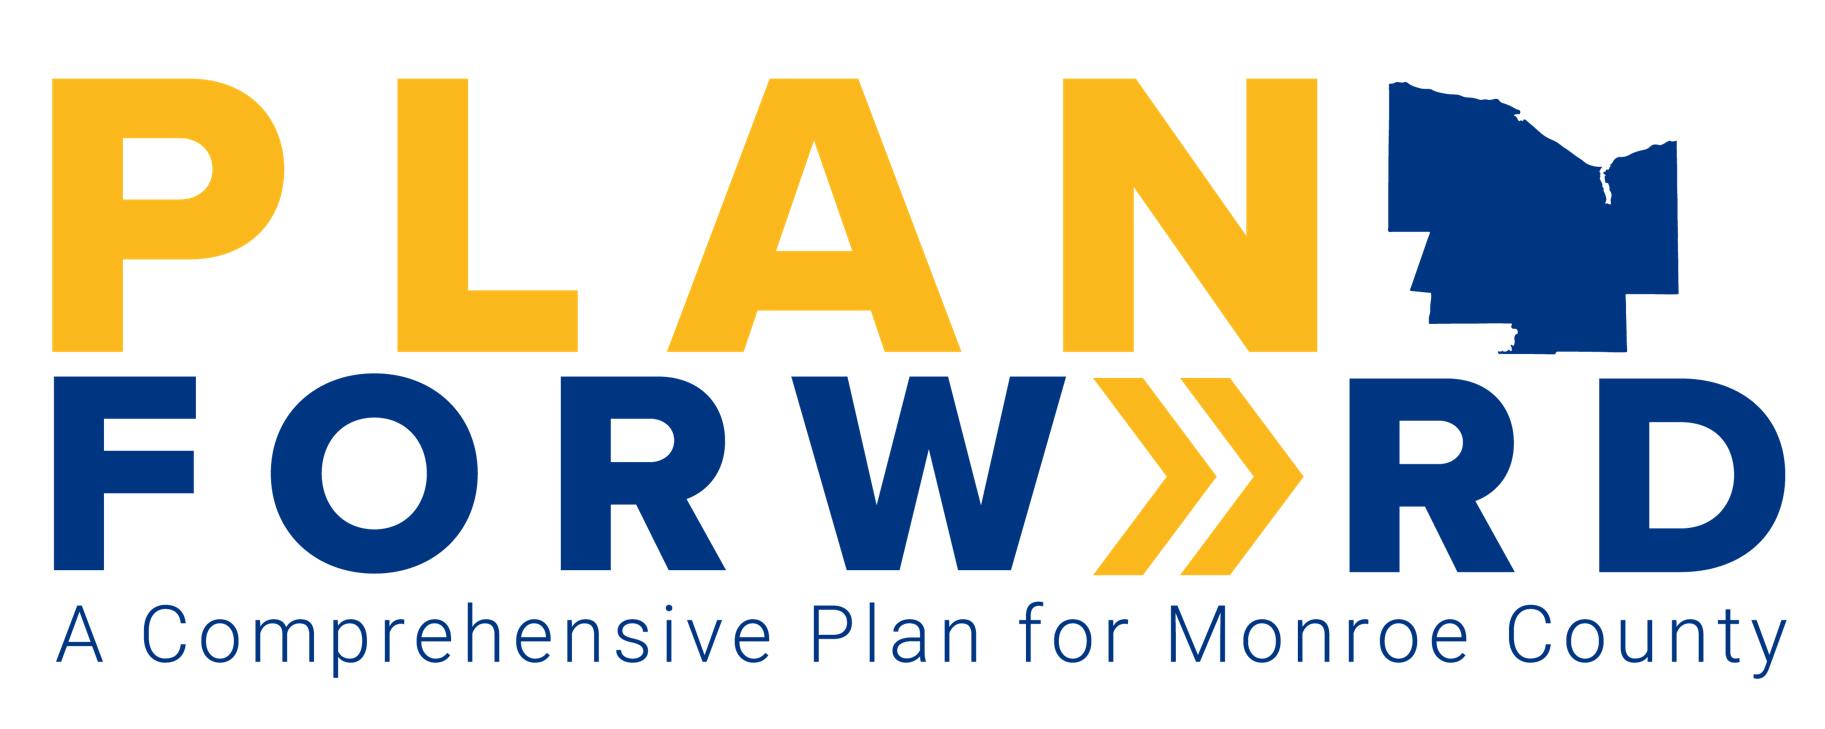 Plan Forward: A Comprehensive Plan for Monroe County